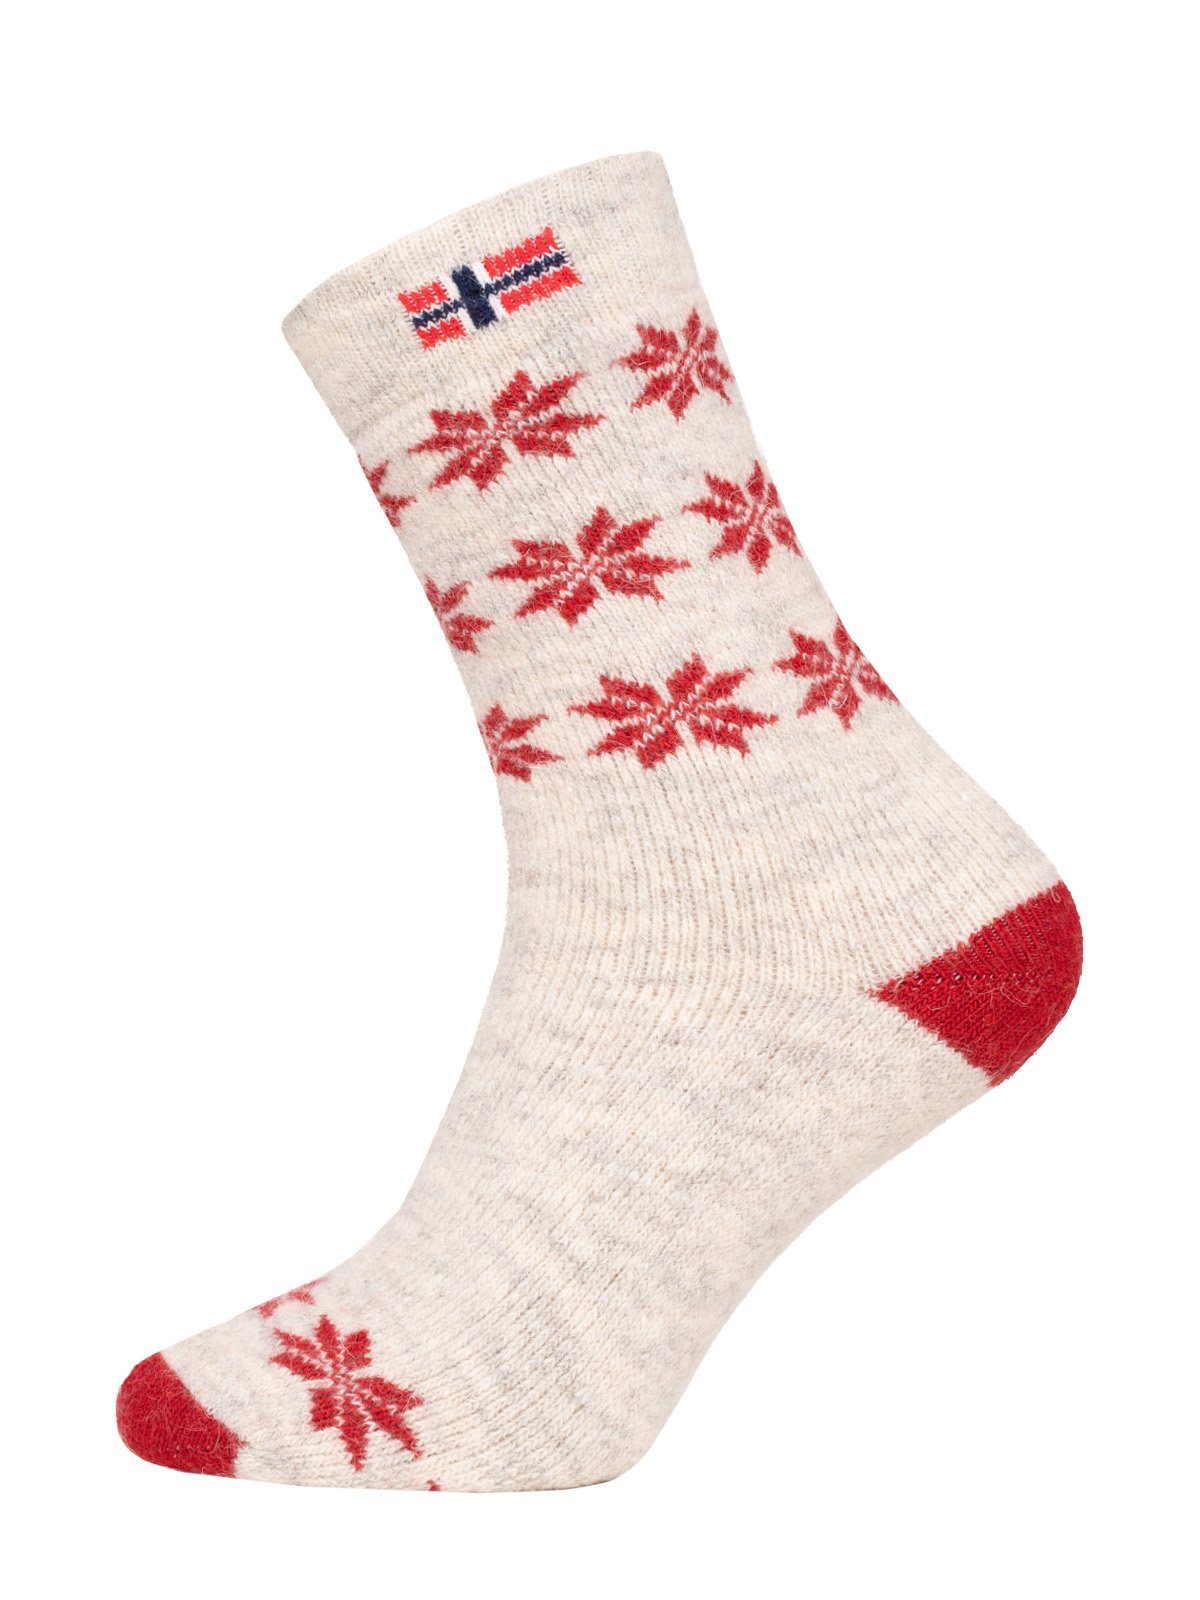 HomeOfSocks Socken Skandinavische Wollsocke "Snowflake Norwegen" Nordic Kuschelsocken Dicke Socken Hyggelig Warm Hoher 80% Wollanteil Norwegischem Design Rot